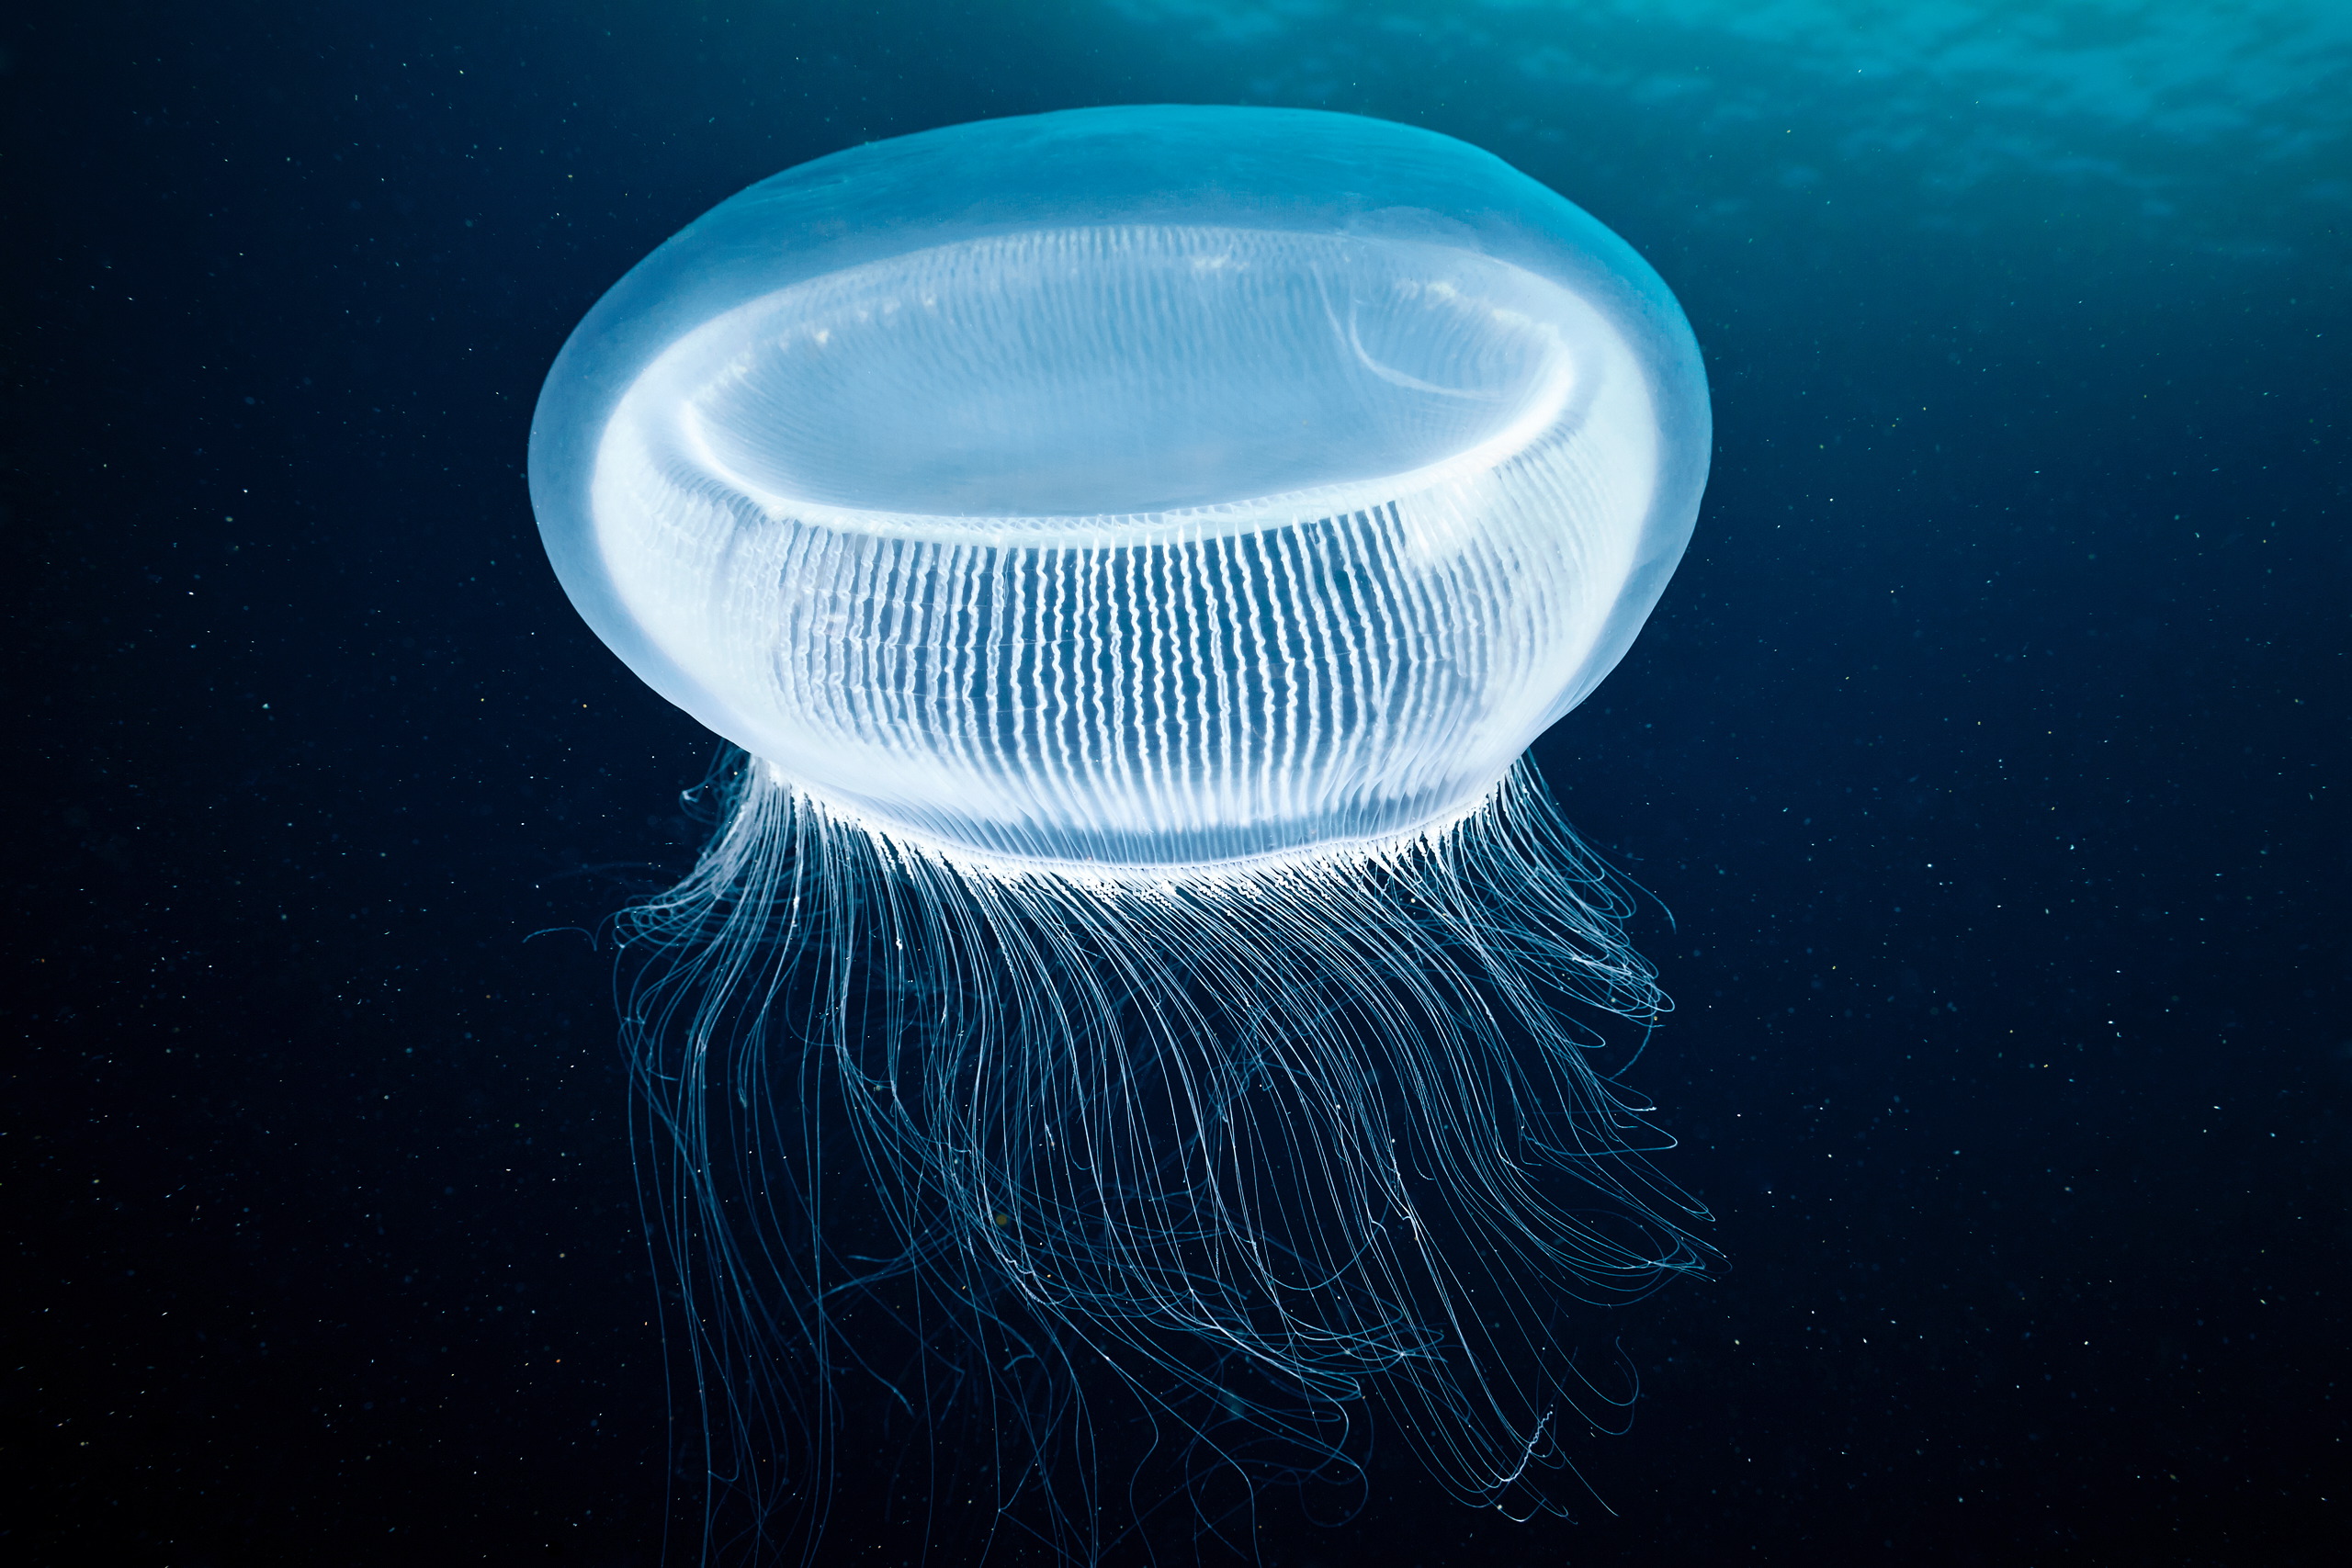 Hydrozoan jellyfish – Aequorea sp. – Crystal jellyfish 2